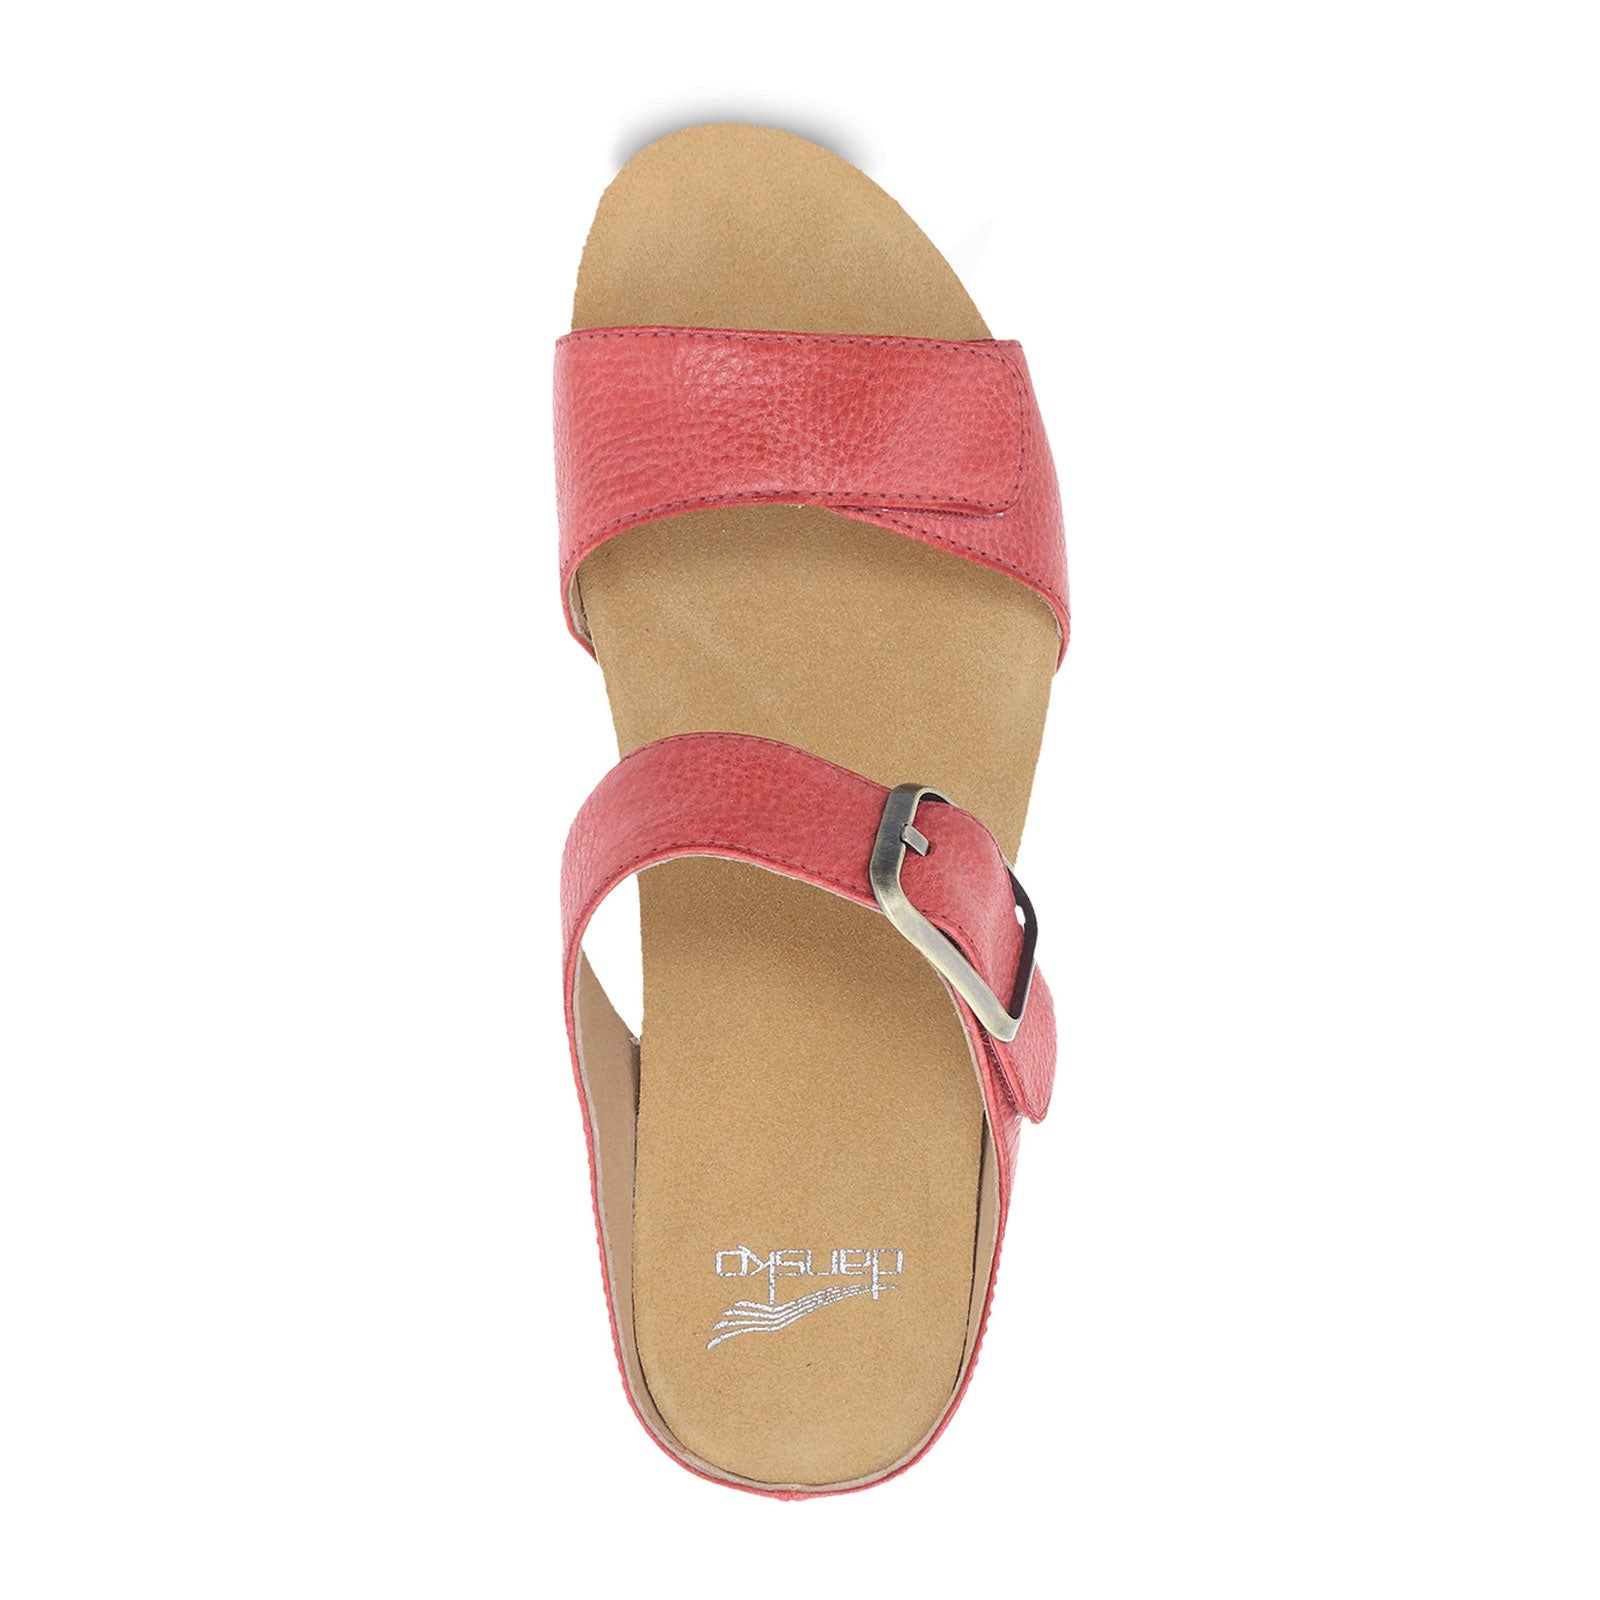 Dansko Tanya Wedge Sandal (Women) - Coral Milled Burnished Sandals - Wedge - The Heel Shoe Fitters